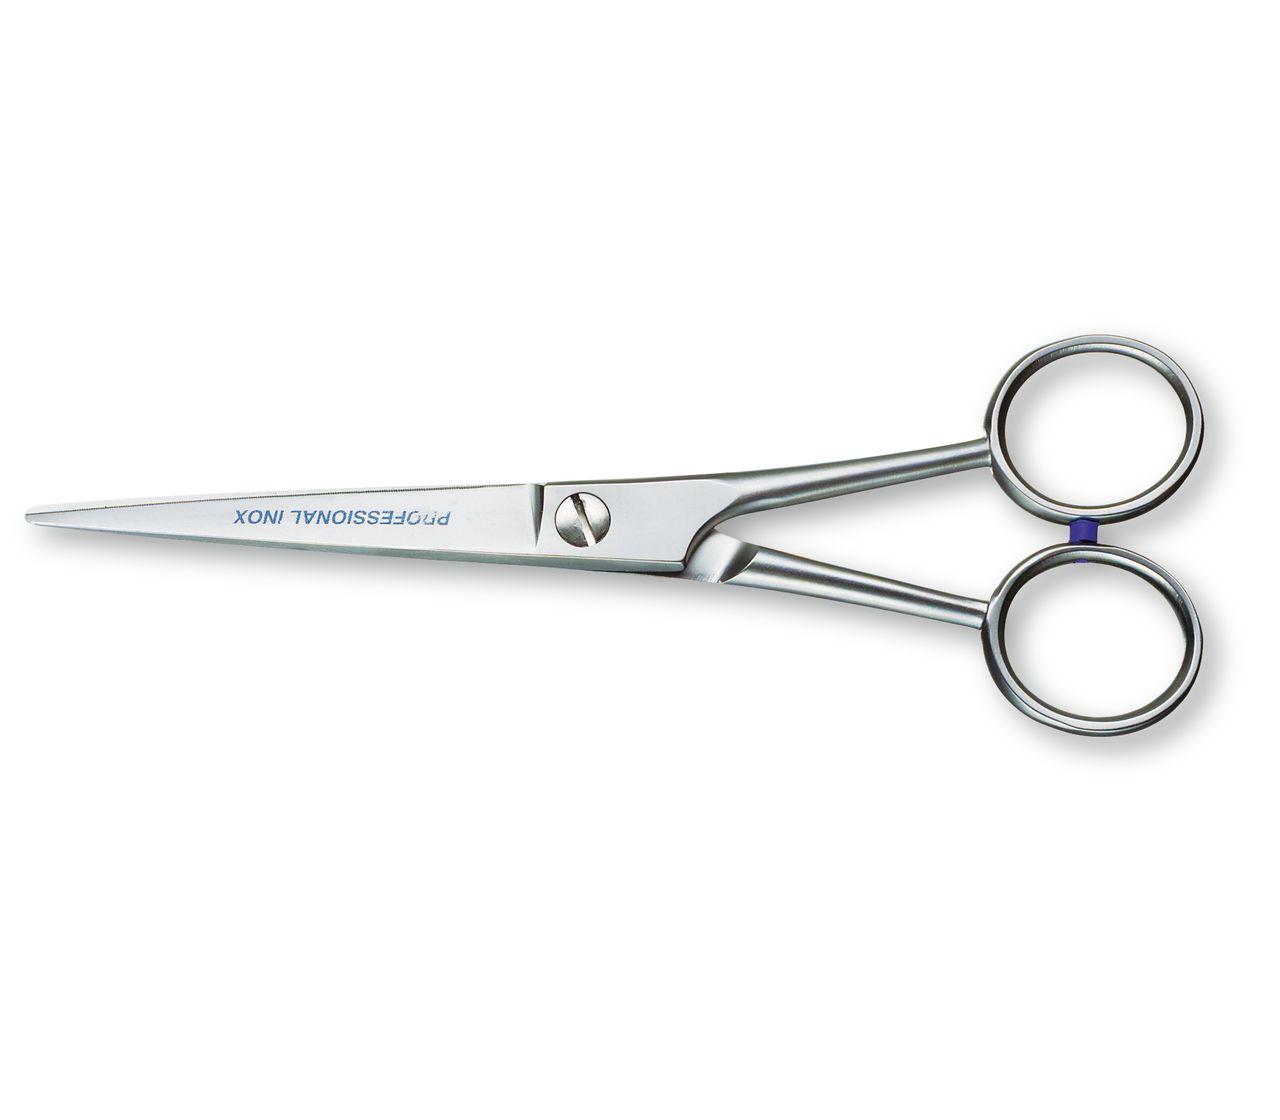 Victorinox Sweden 8.1016.15, 15 cm household scissors